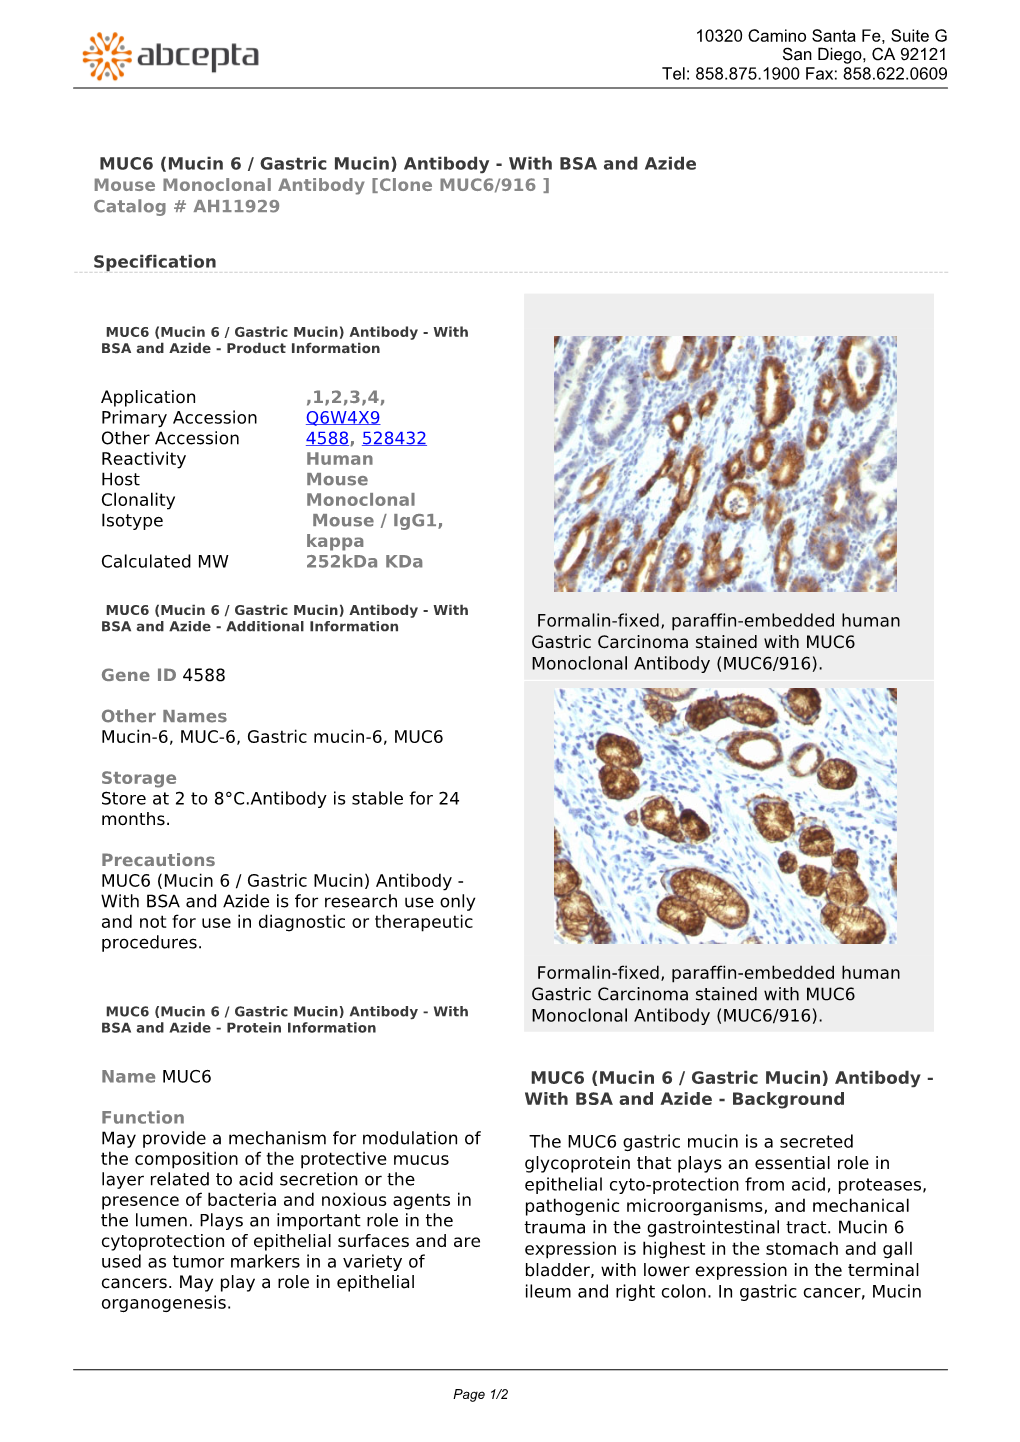 MUC6 (Mucin 6 / Gastric Mucin) Antibody - with BSA and Azide Mouse Monoclonal Antibody [Clone MUC6/916 ] Catalog # AH11929